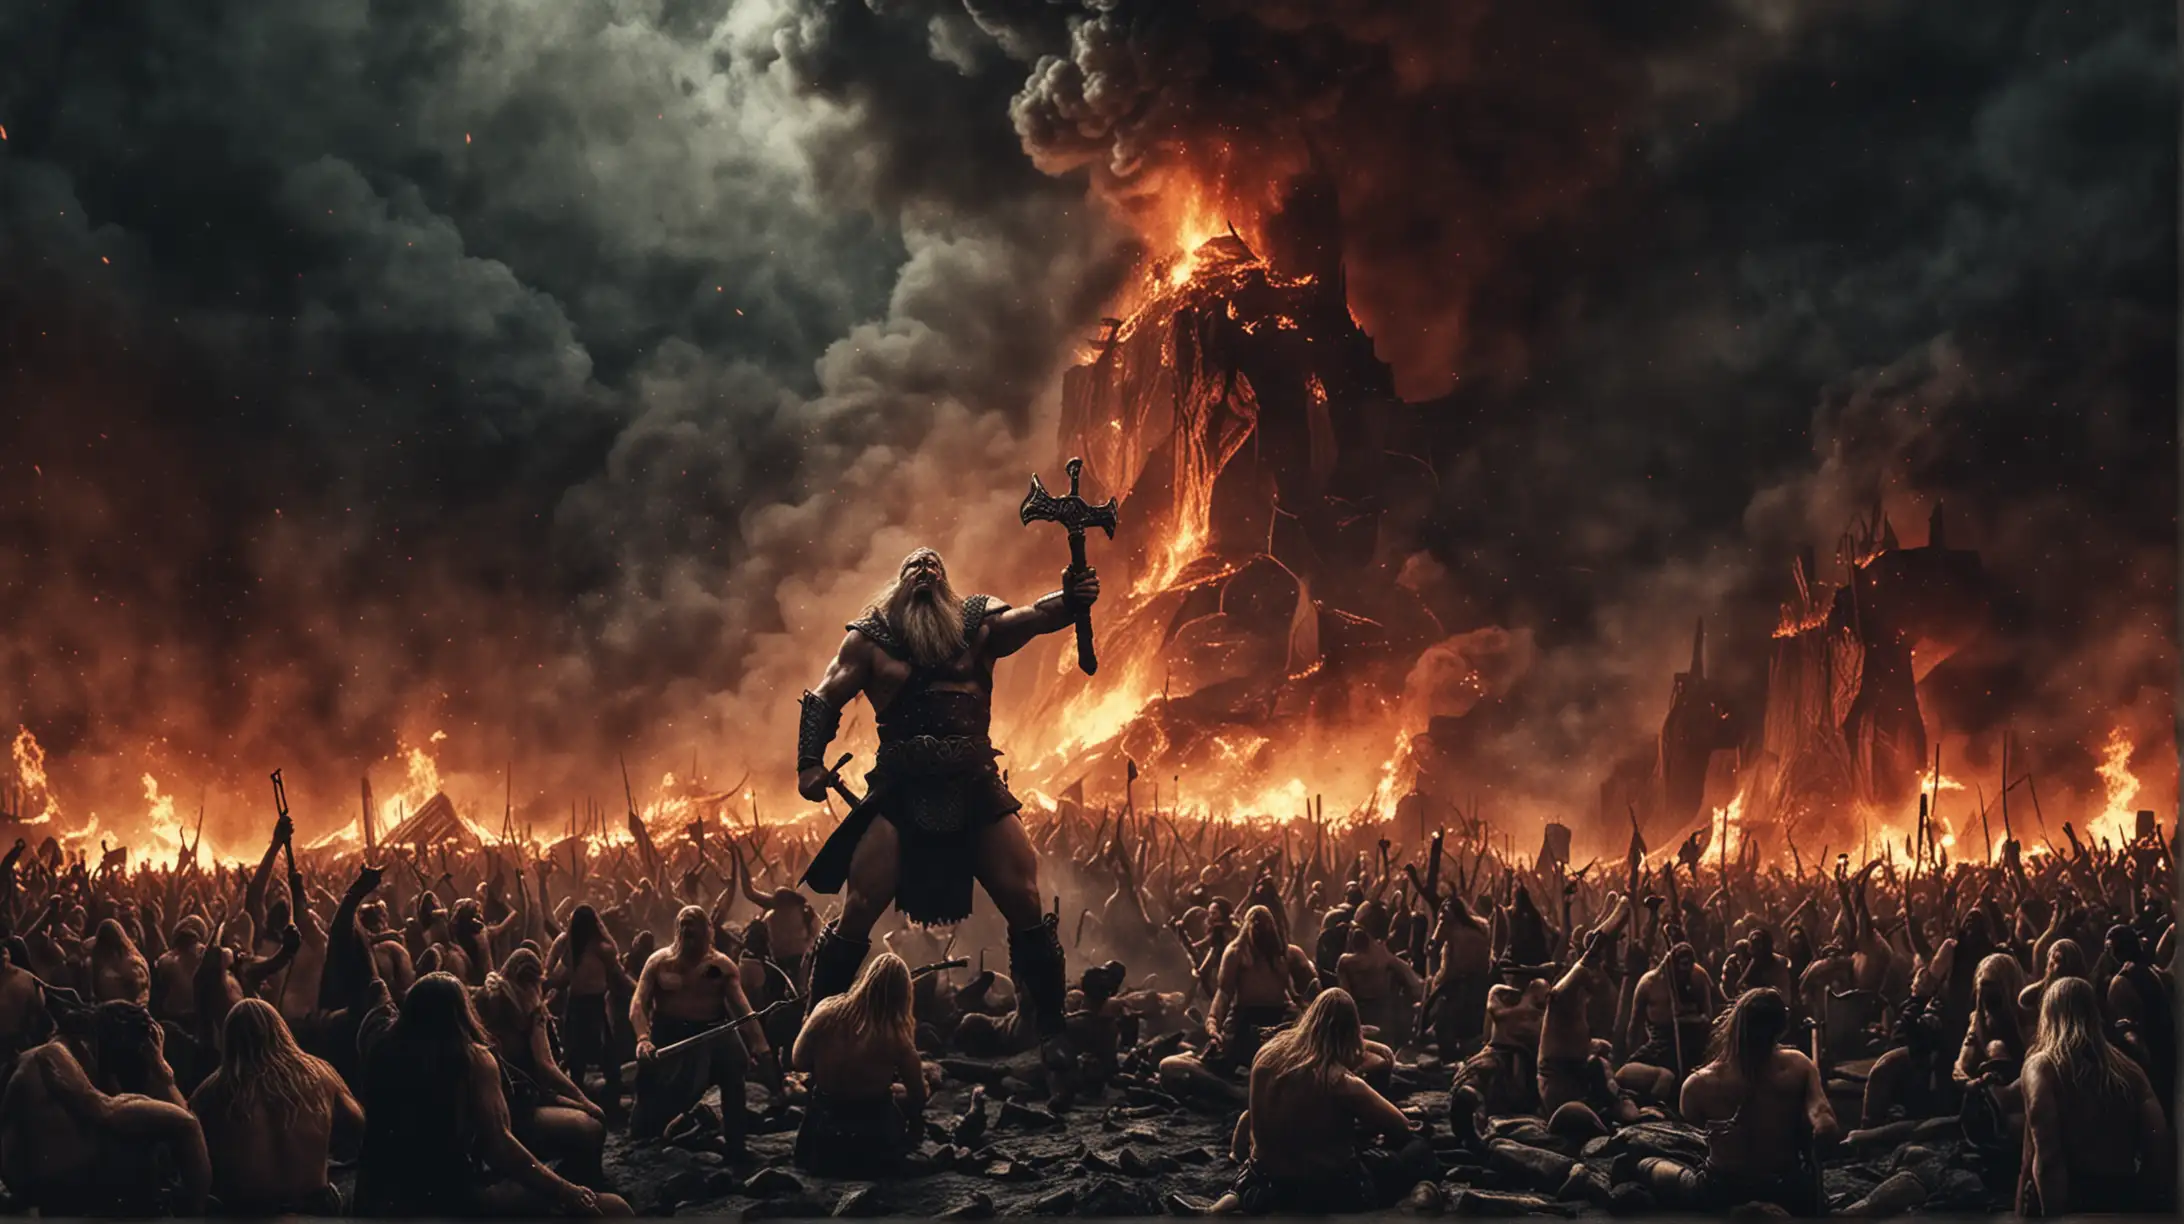 Amon Amarth Eruption Dark Night Smoke and Fire